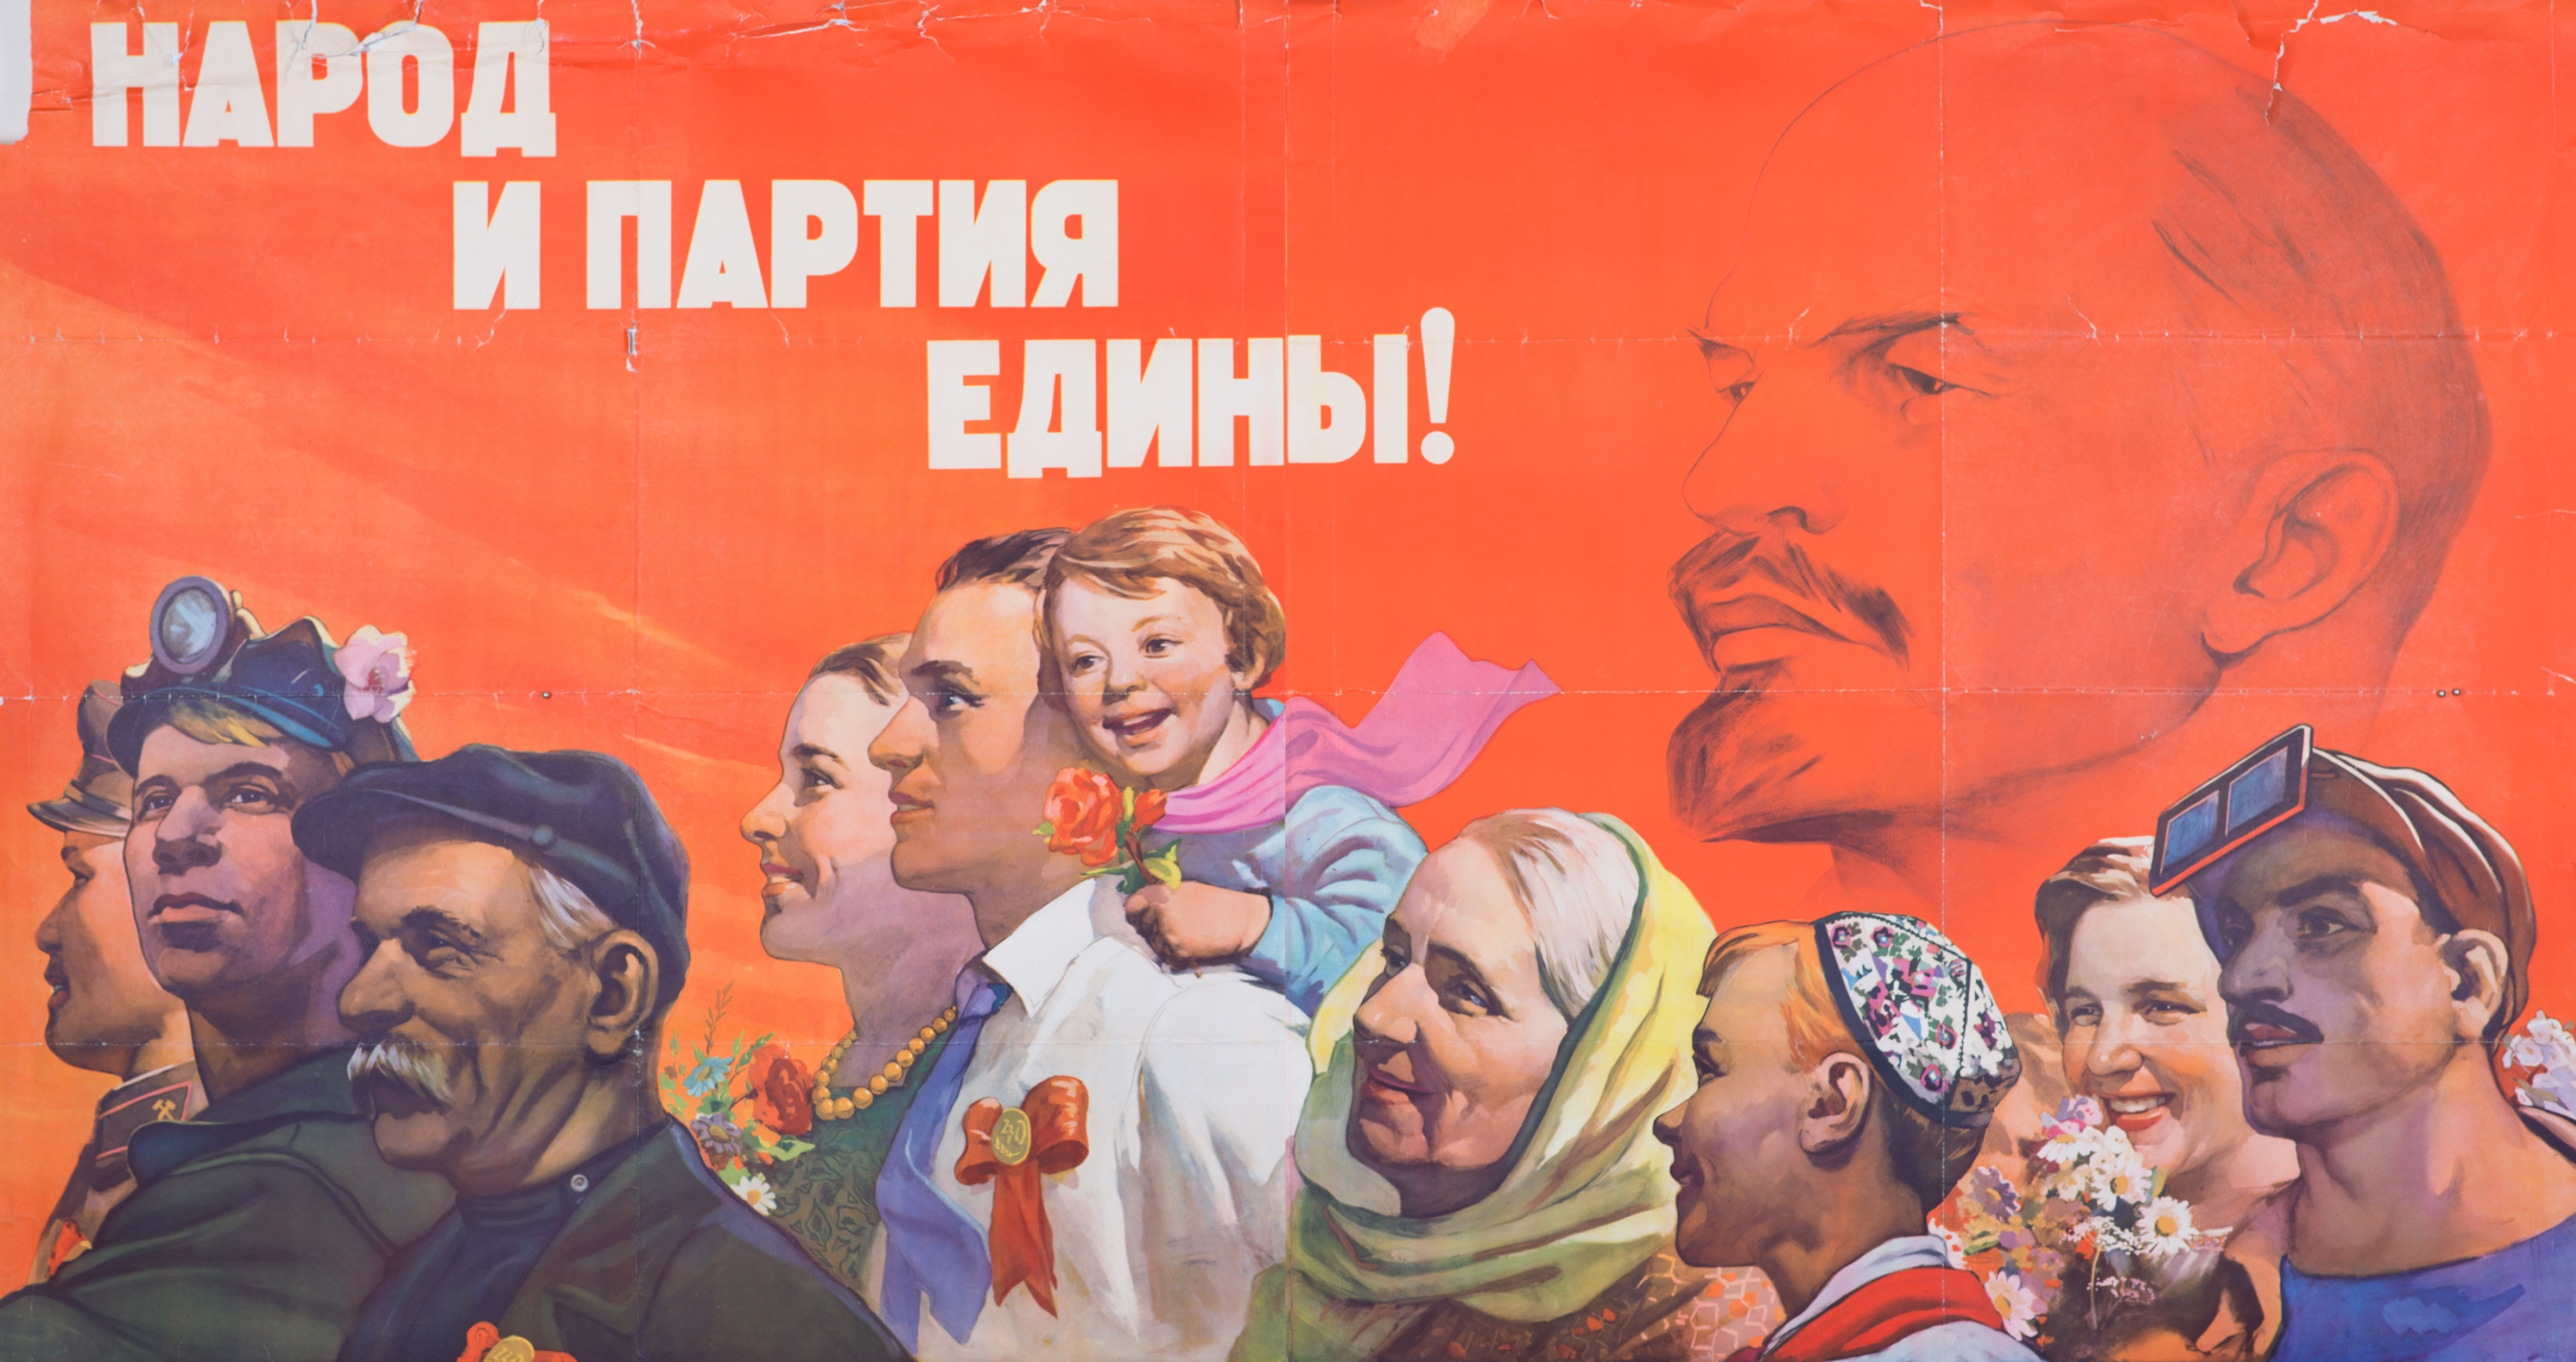 Нация советский народ. Народ и партия едины плакат. Советские партийные плакаты. Советские плакаты про партию. Советские плакаты народы СССР.